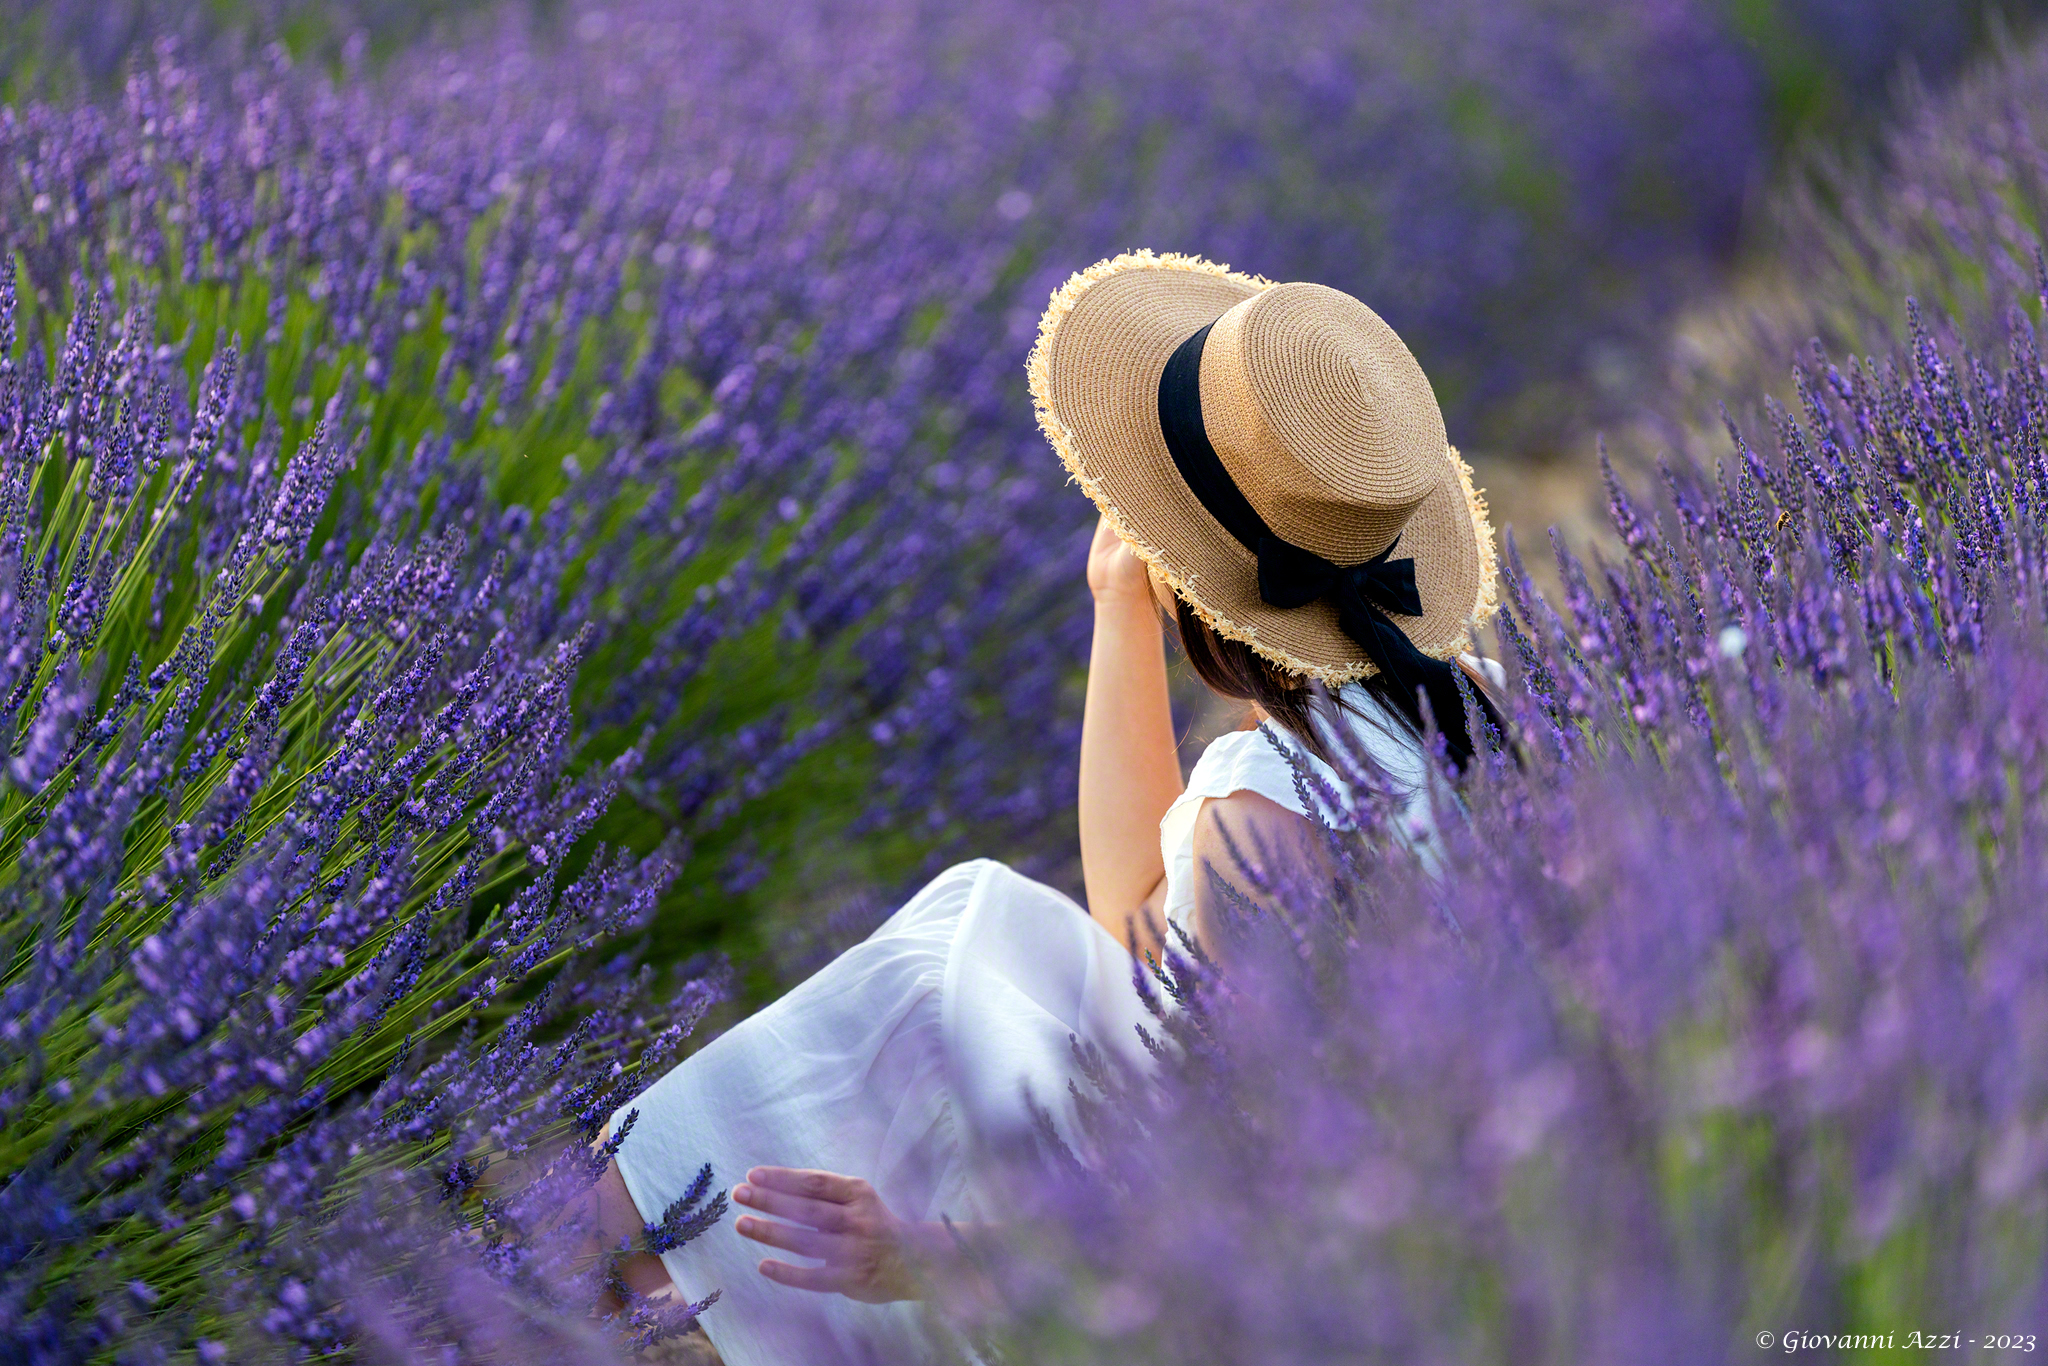 Eleonora among lavender 4...